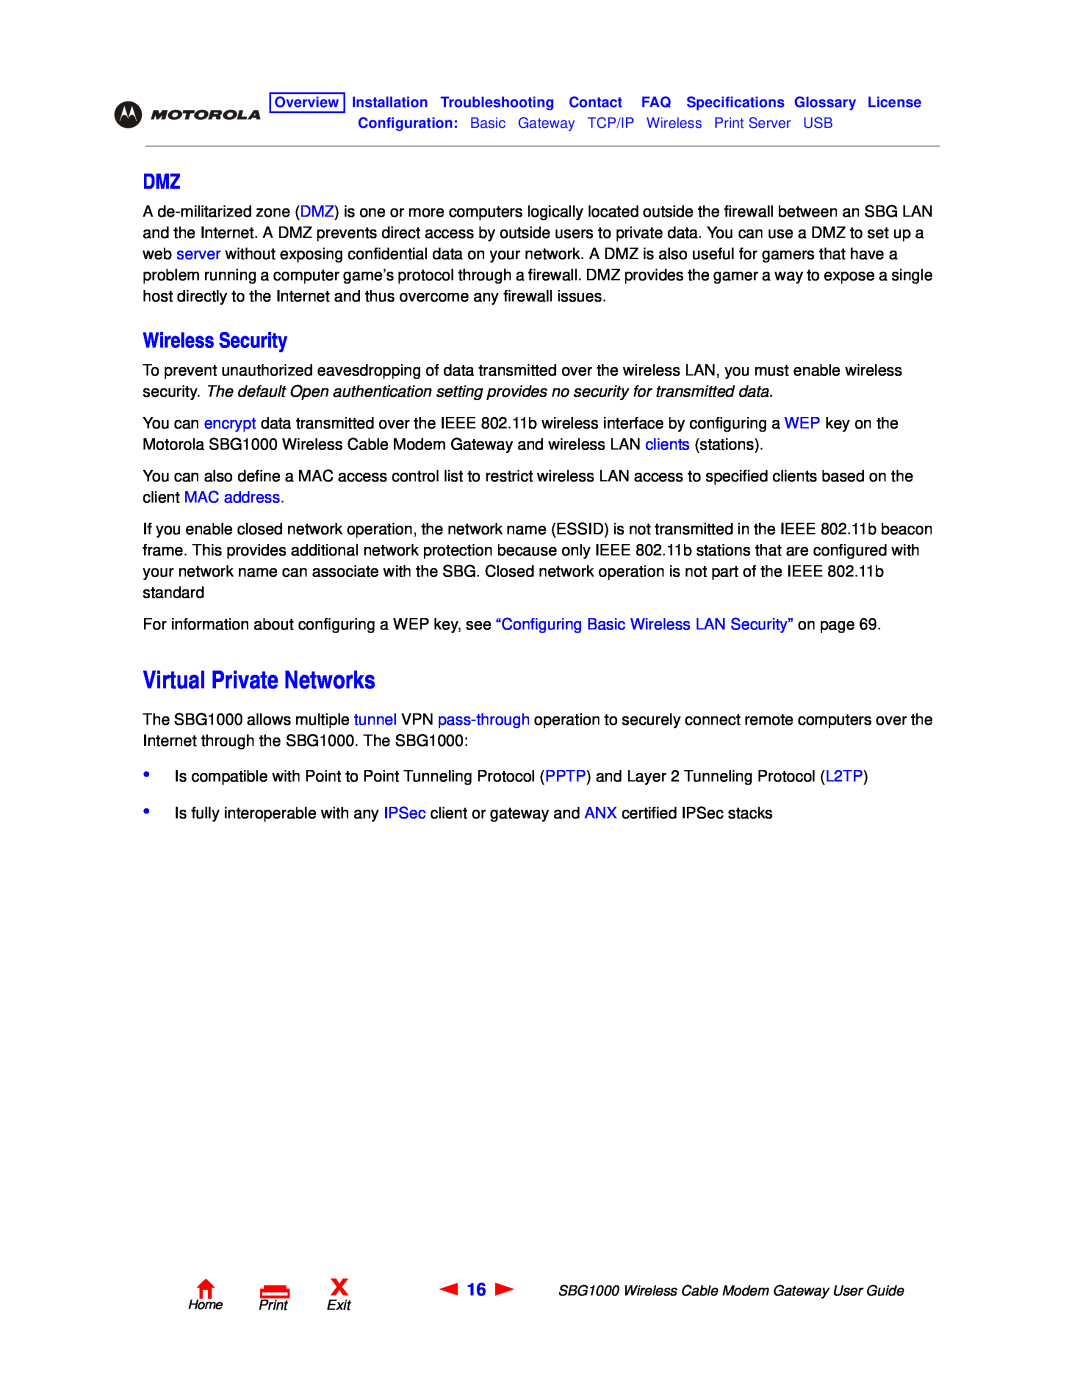 Motorola SBG1000 manual Virtual Private Networks, Wireless Security 